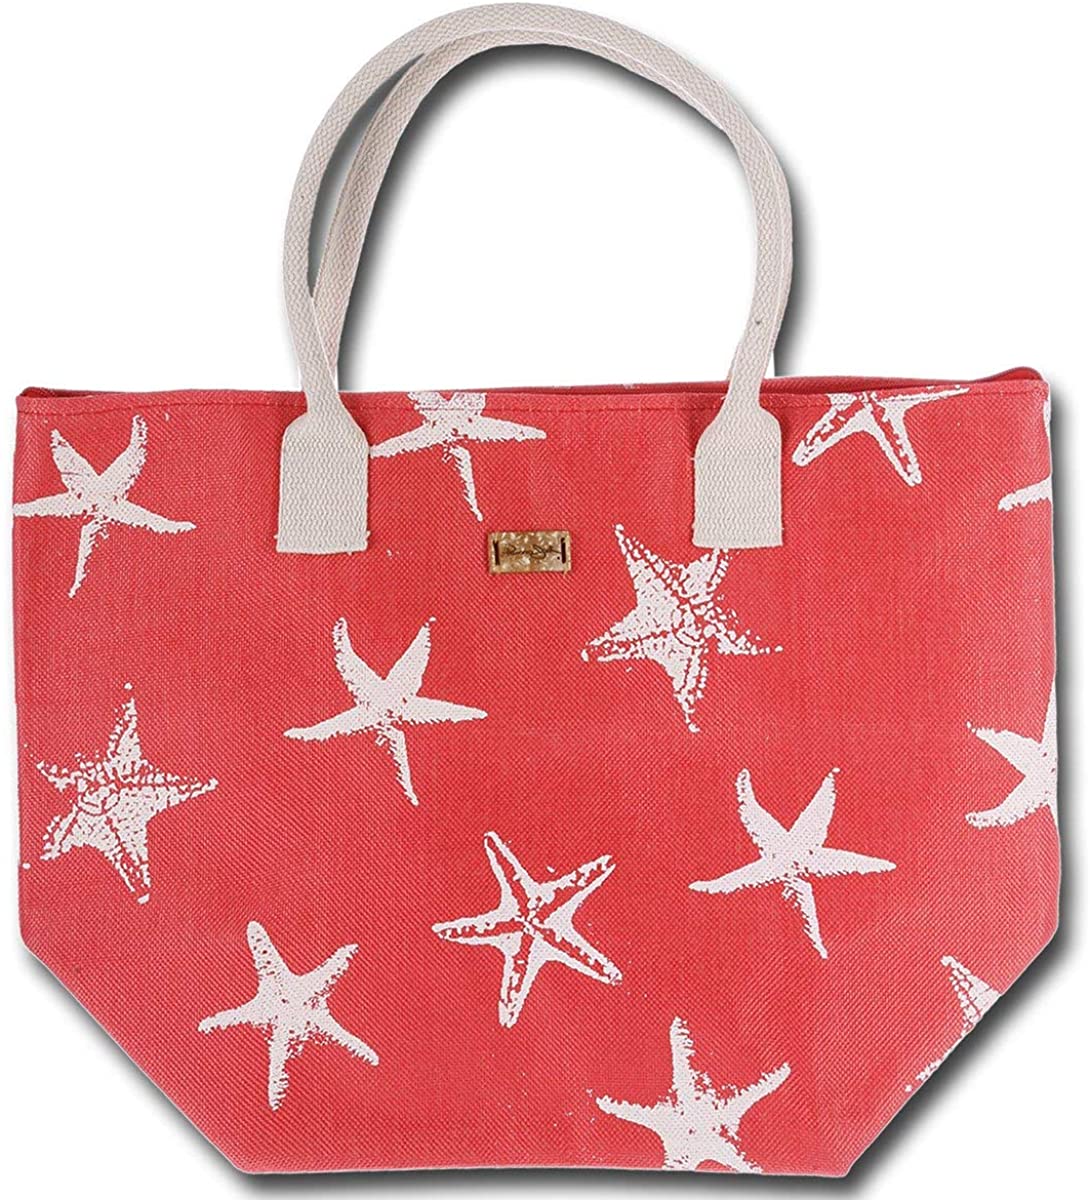 Price:$24.00    Panama Jack Starfish Print Beach Tote Bag (Coral)  Clothing